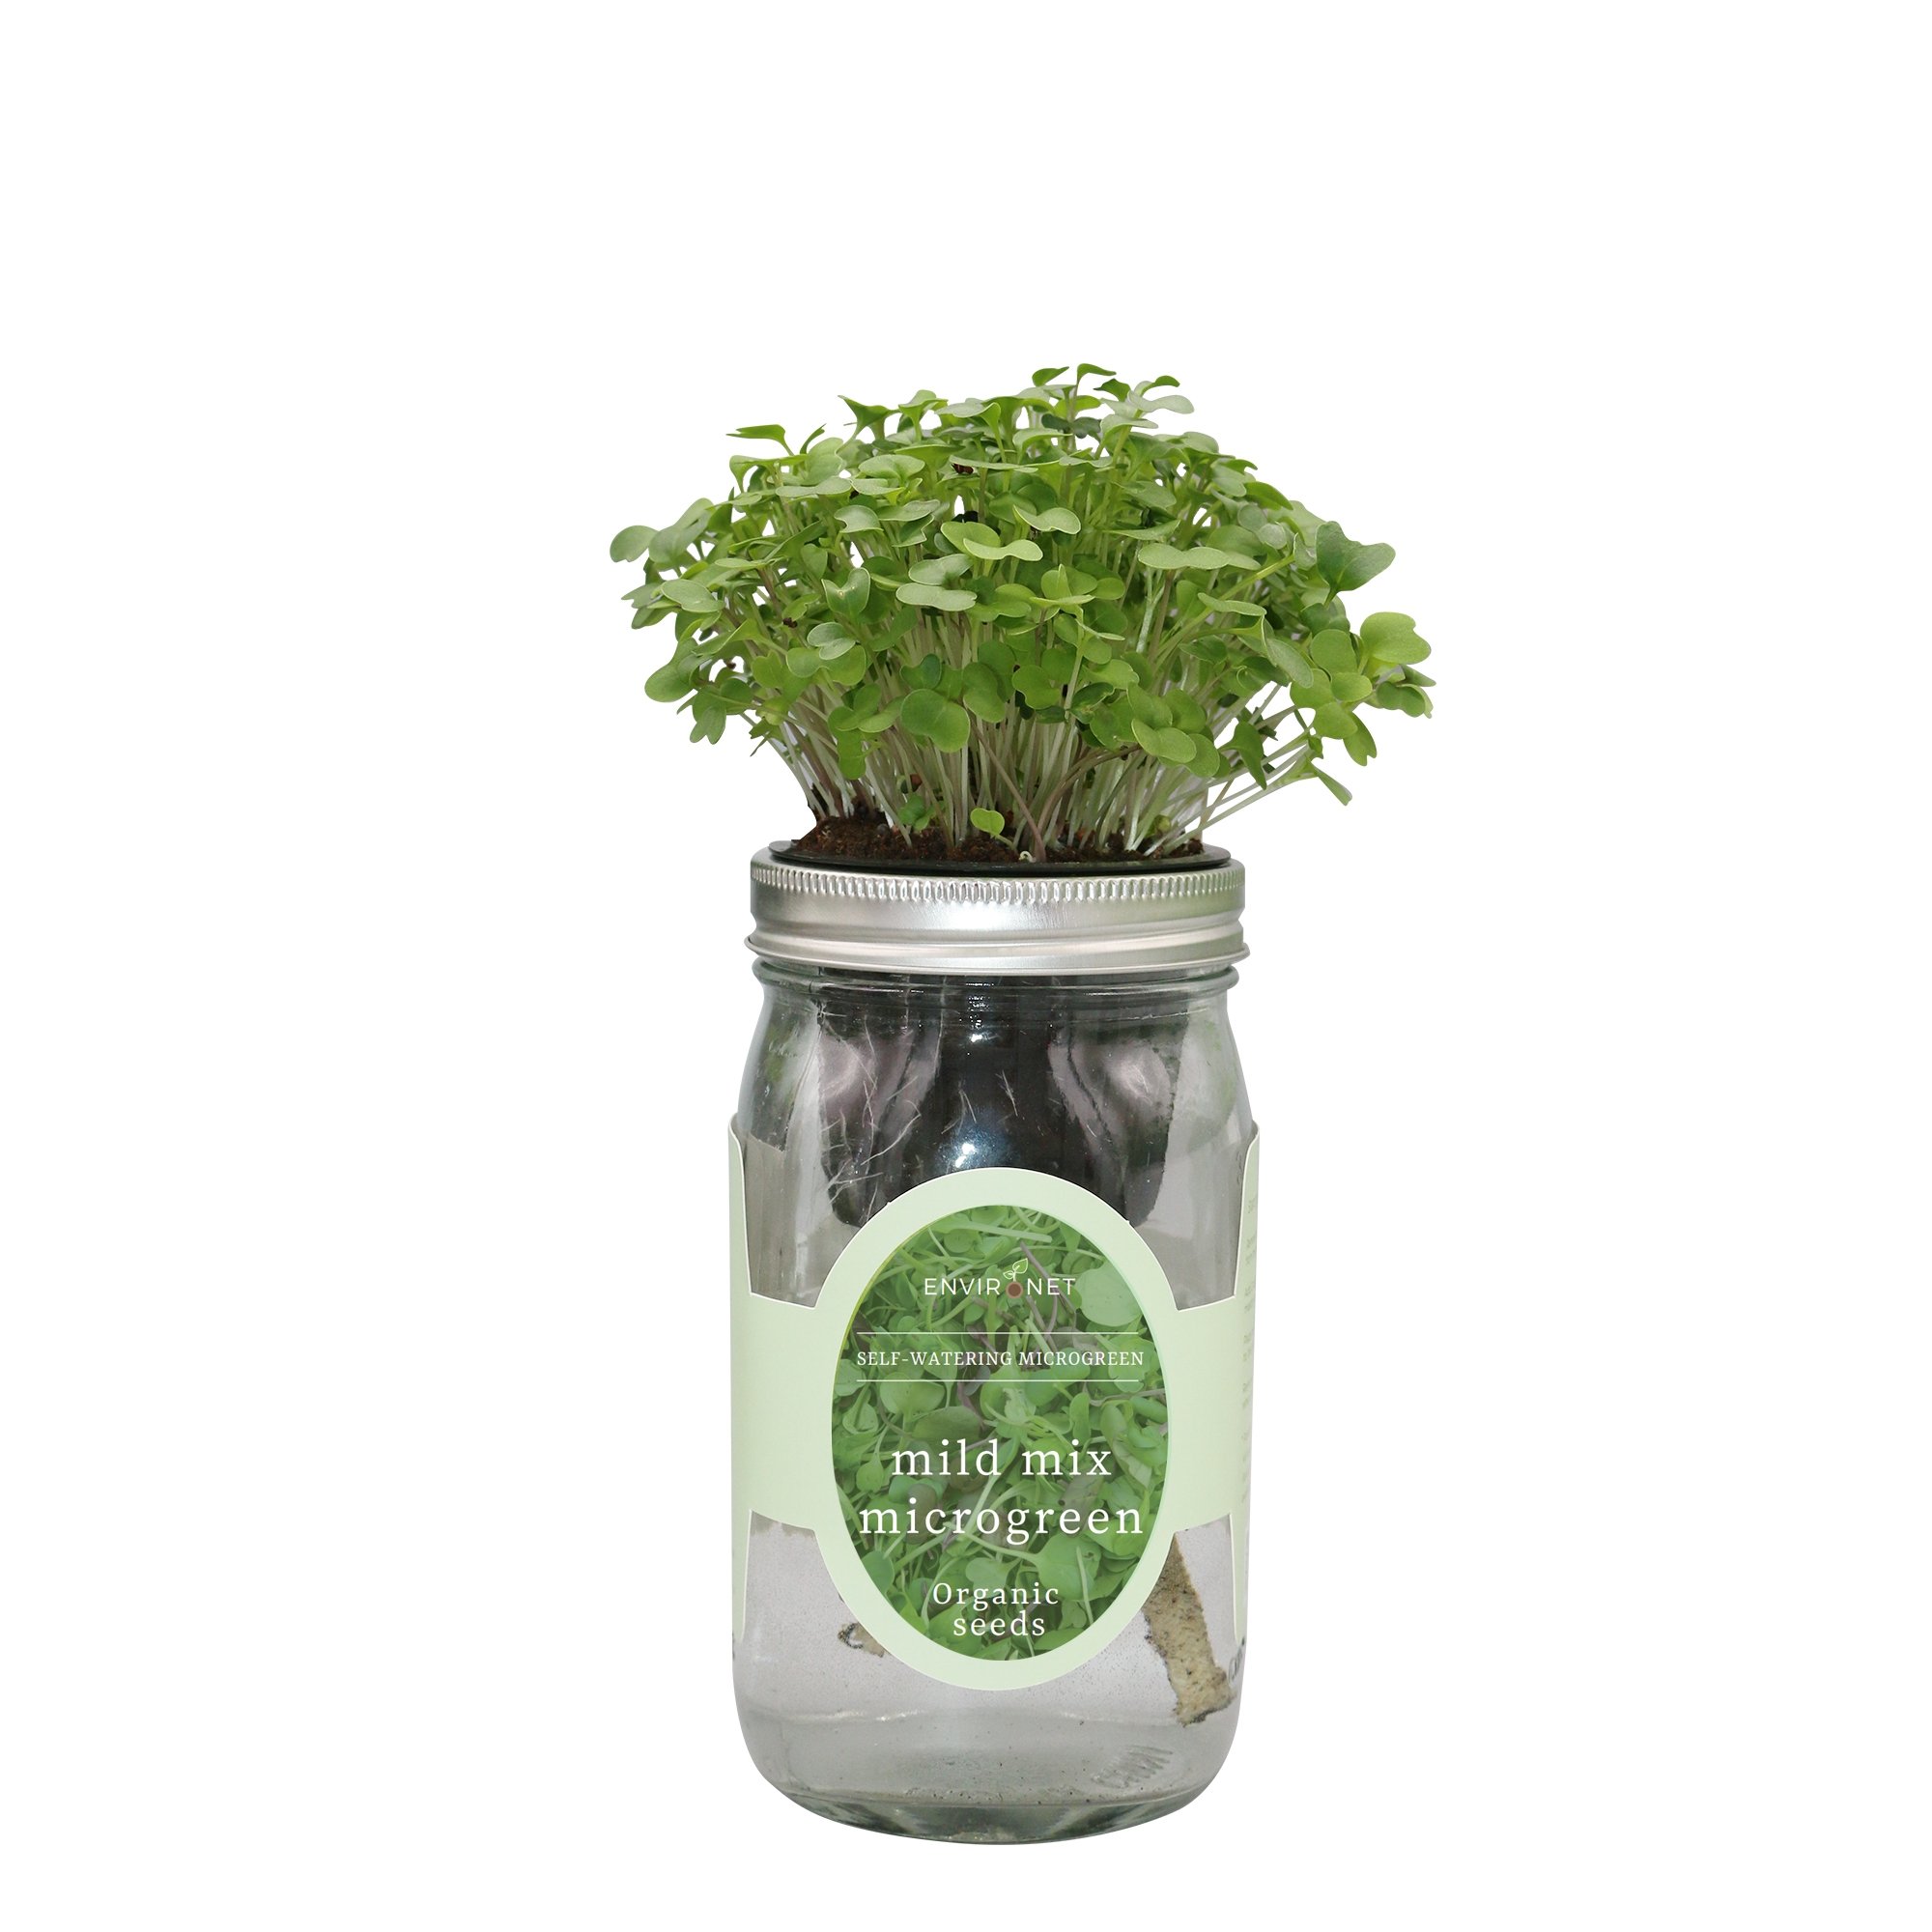 Hydroponic Microgreens Growing Kit - Self Watering Mason Jar Growing Kit with Organic Seeds (Mild Mix)